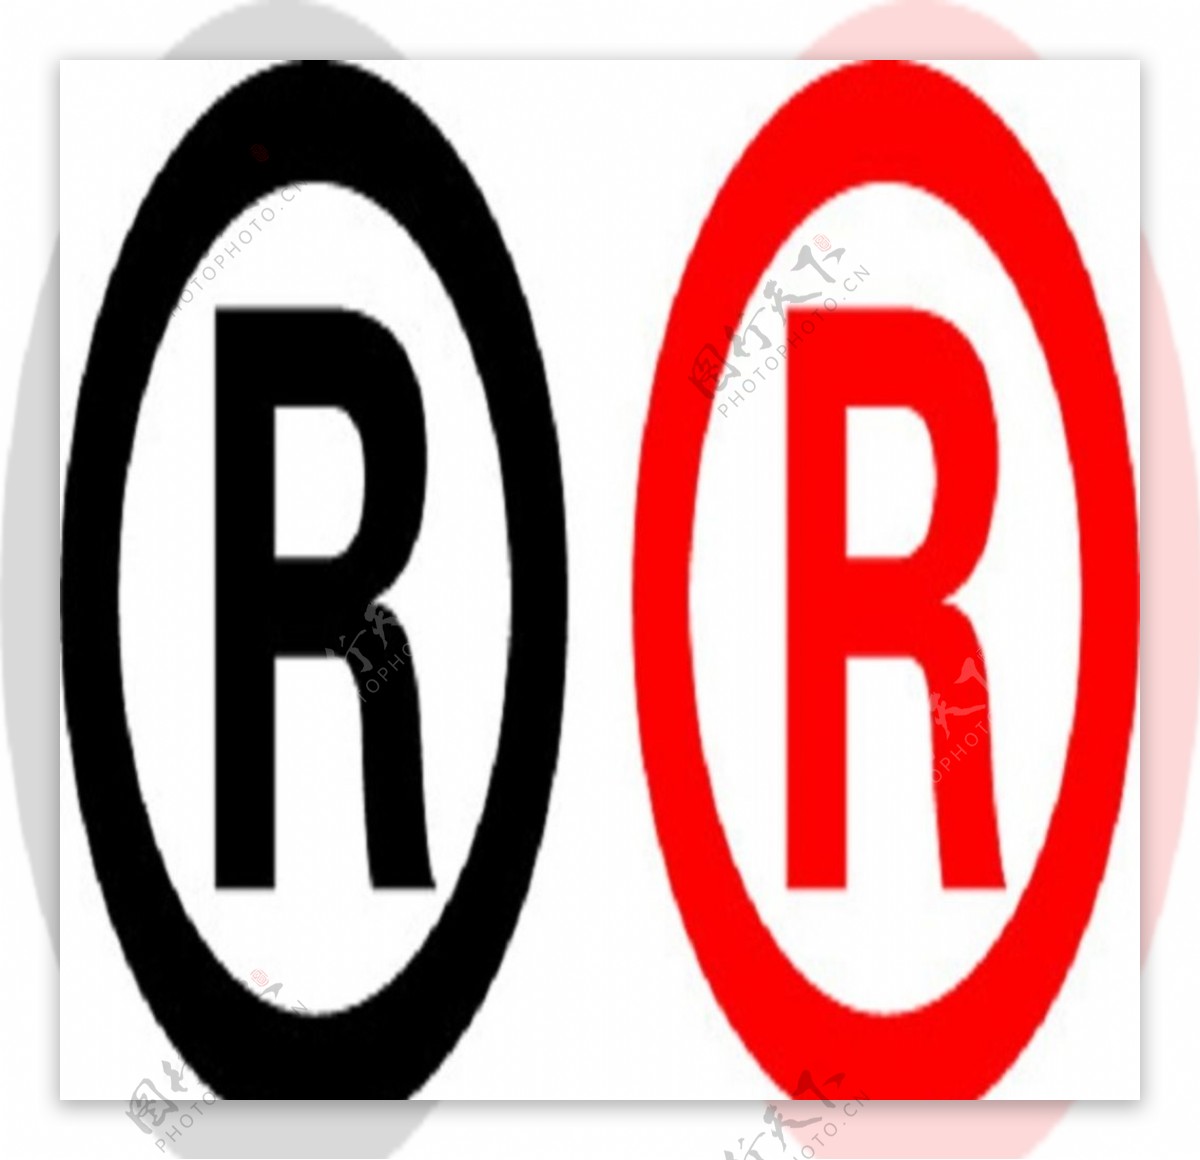 R商标标识